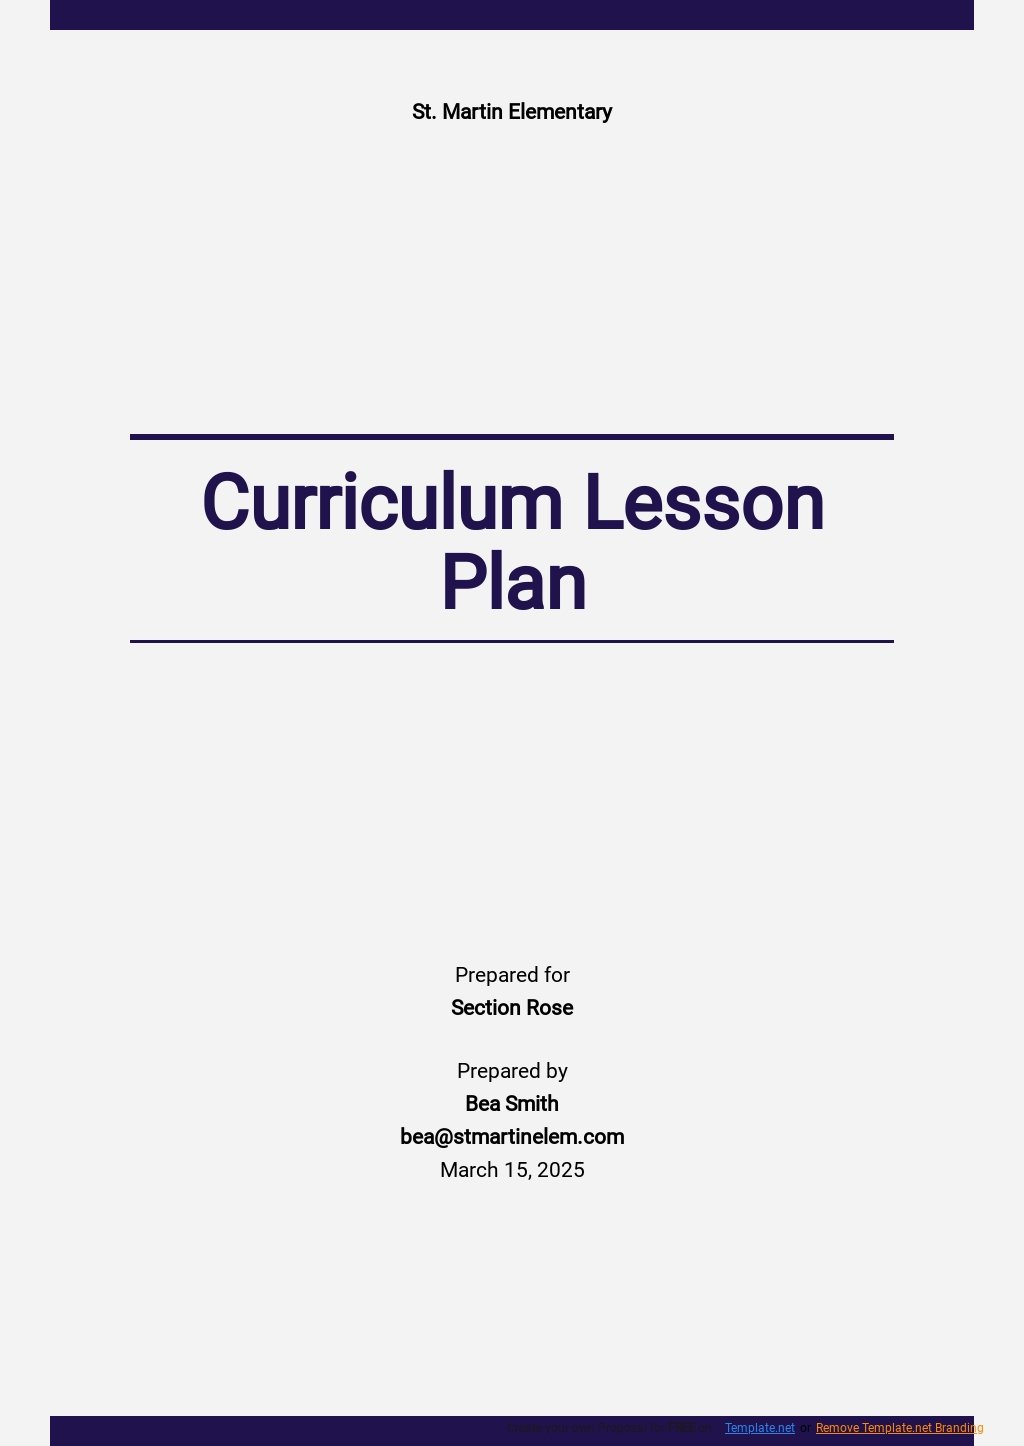 Sample Curriculum Lesson Plan Template.jpe